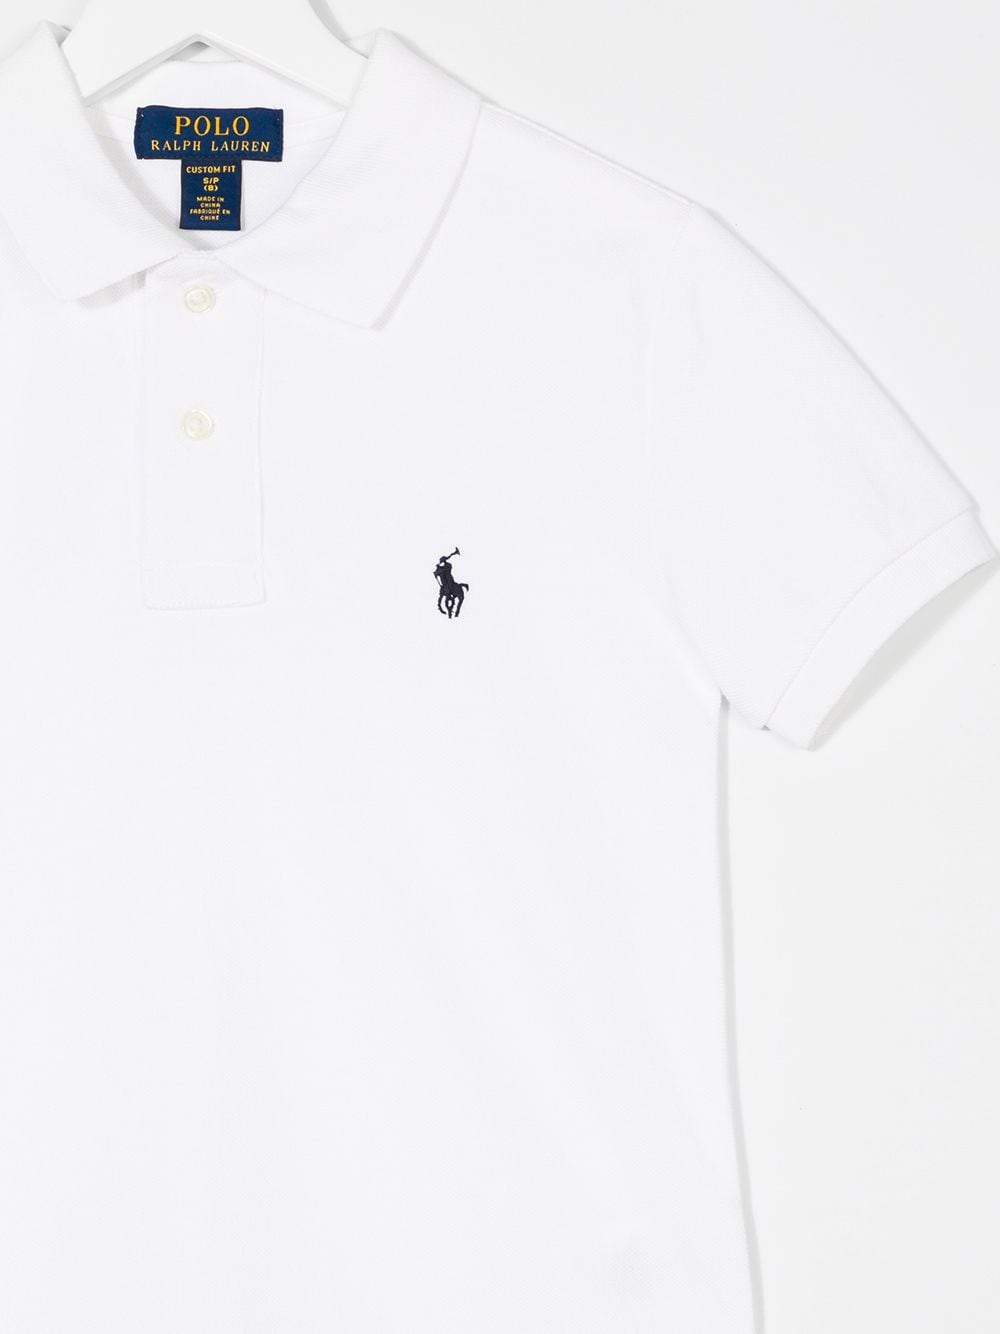 White cotton classic polo shirt